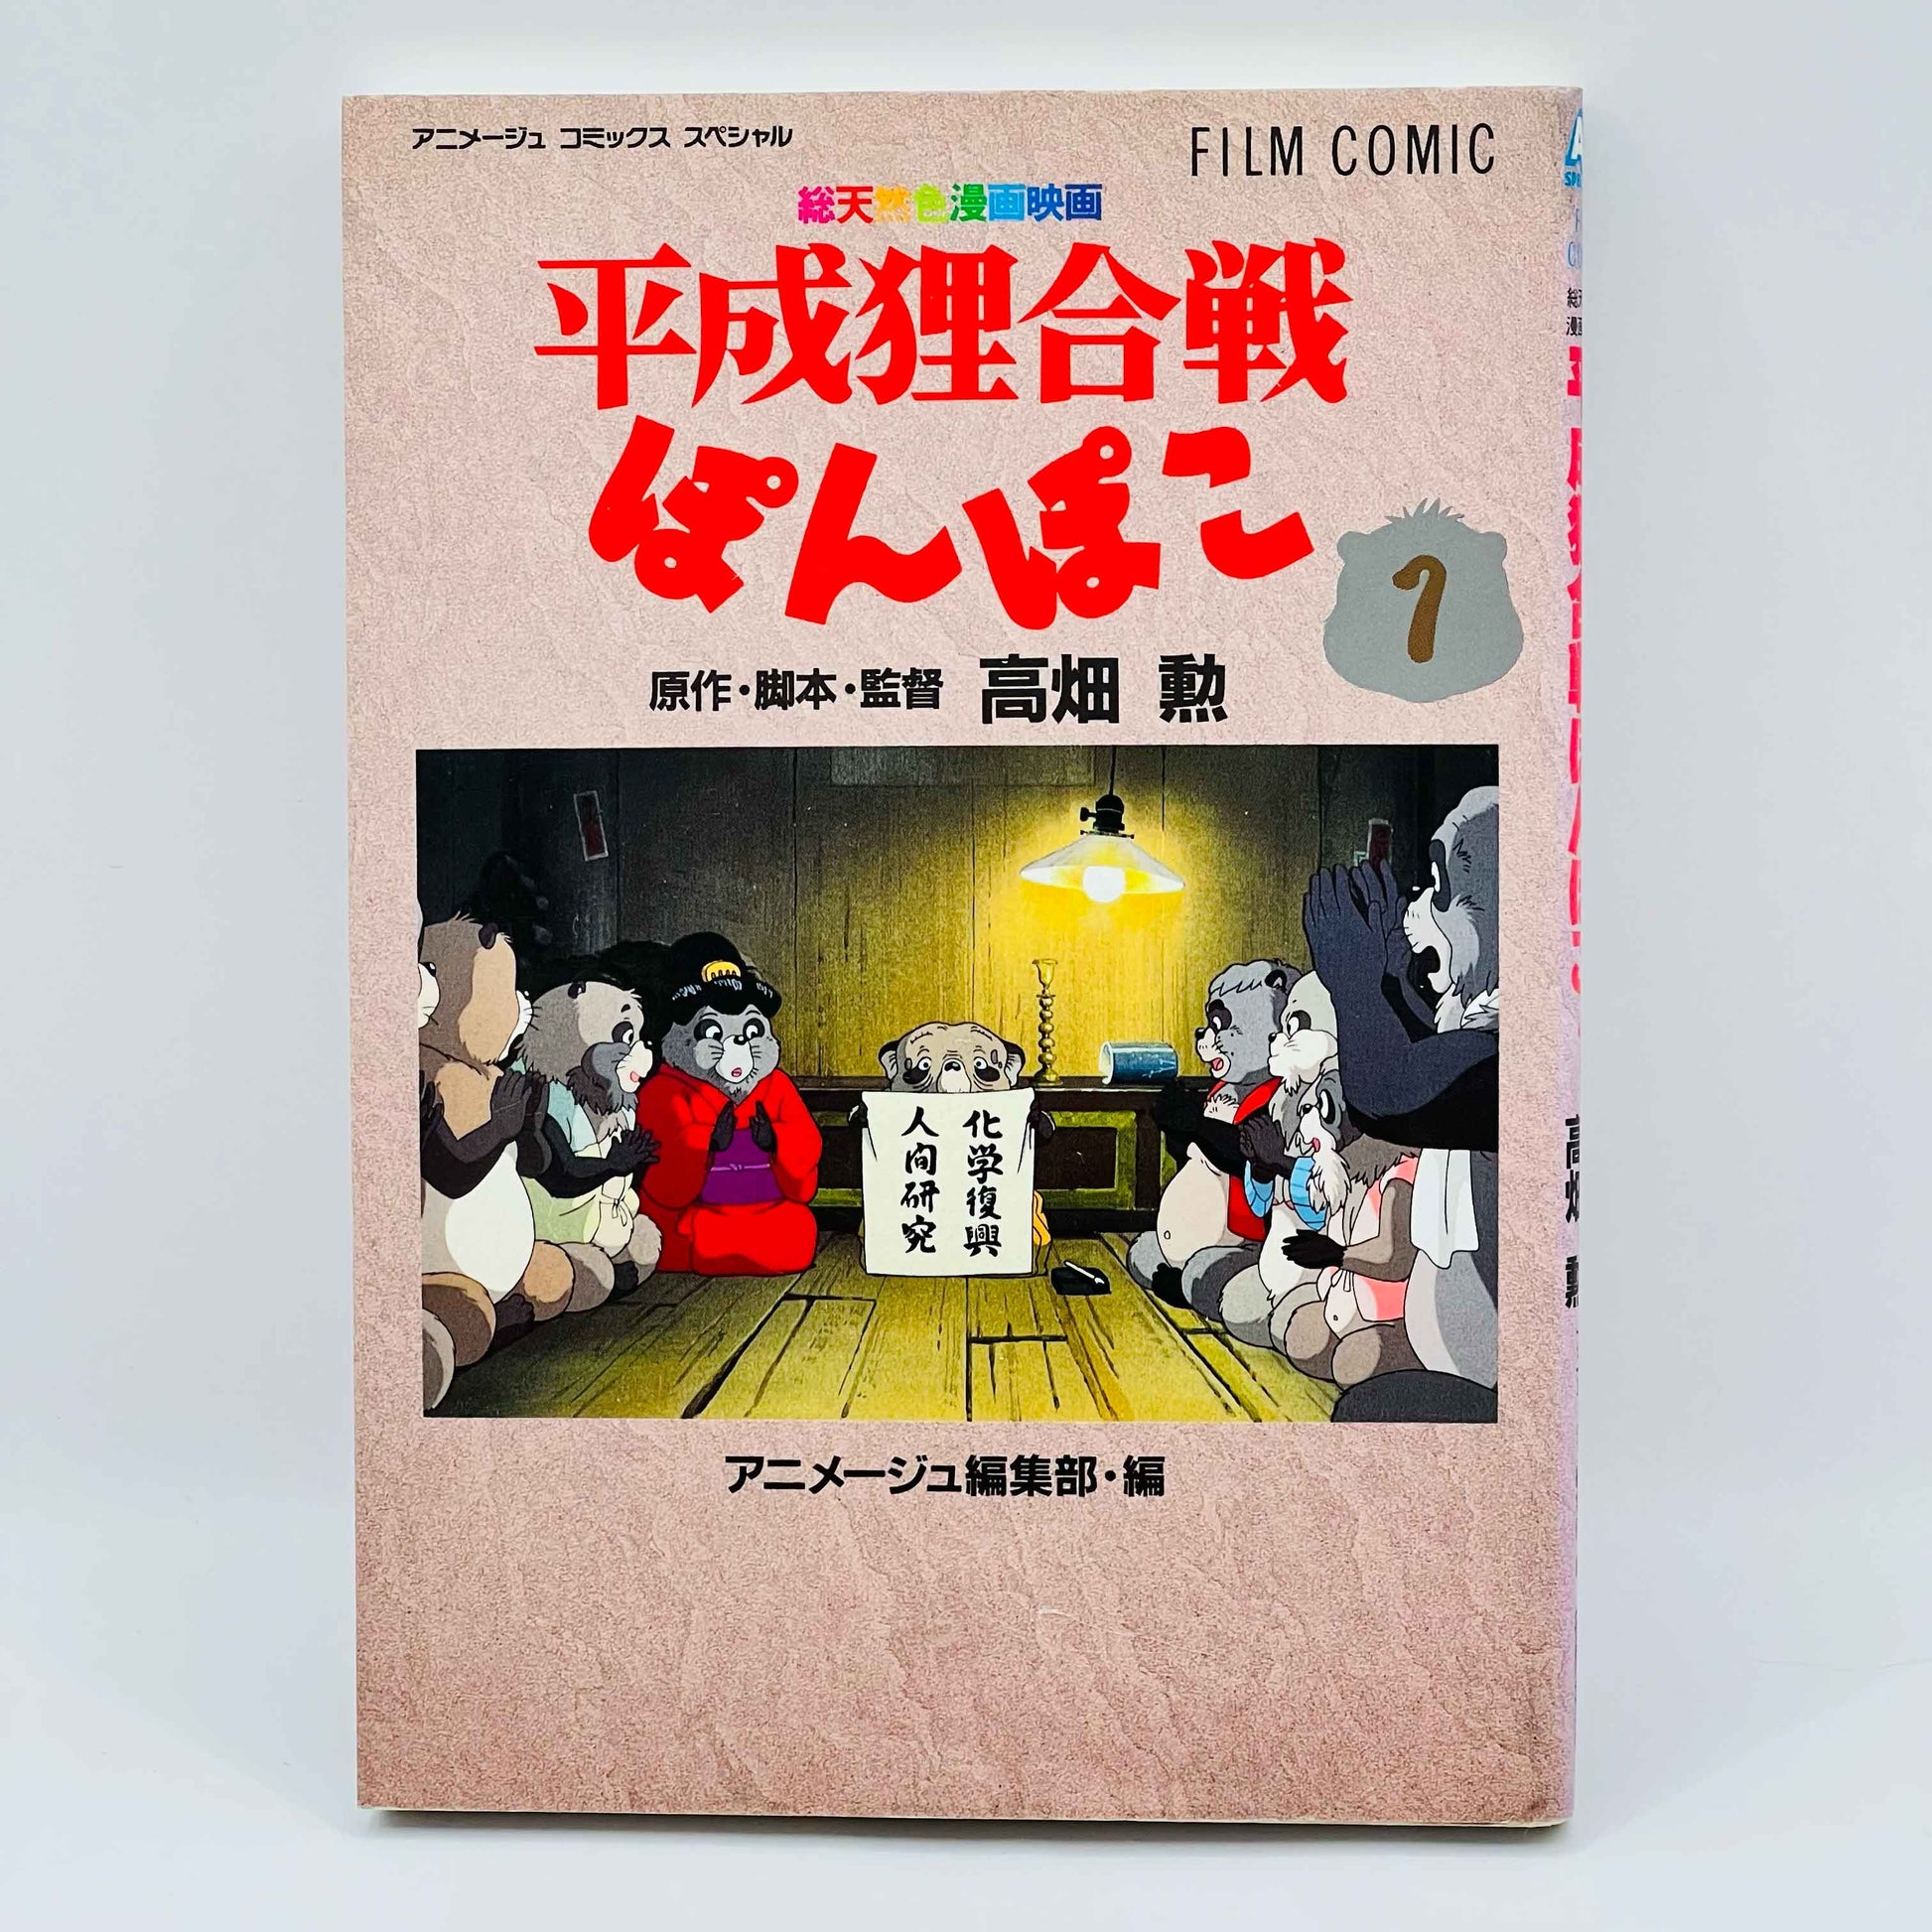 Pom Poko (Ghibli Anime Comics) - Volume 01 - 1stPrint.net - 1st First Print Edition Manga Store - M-POMPOKOAC-01-001